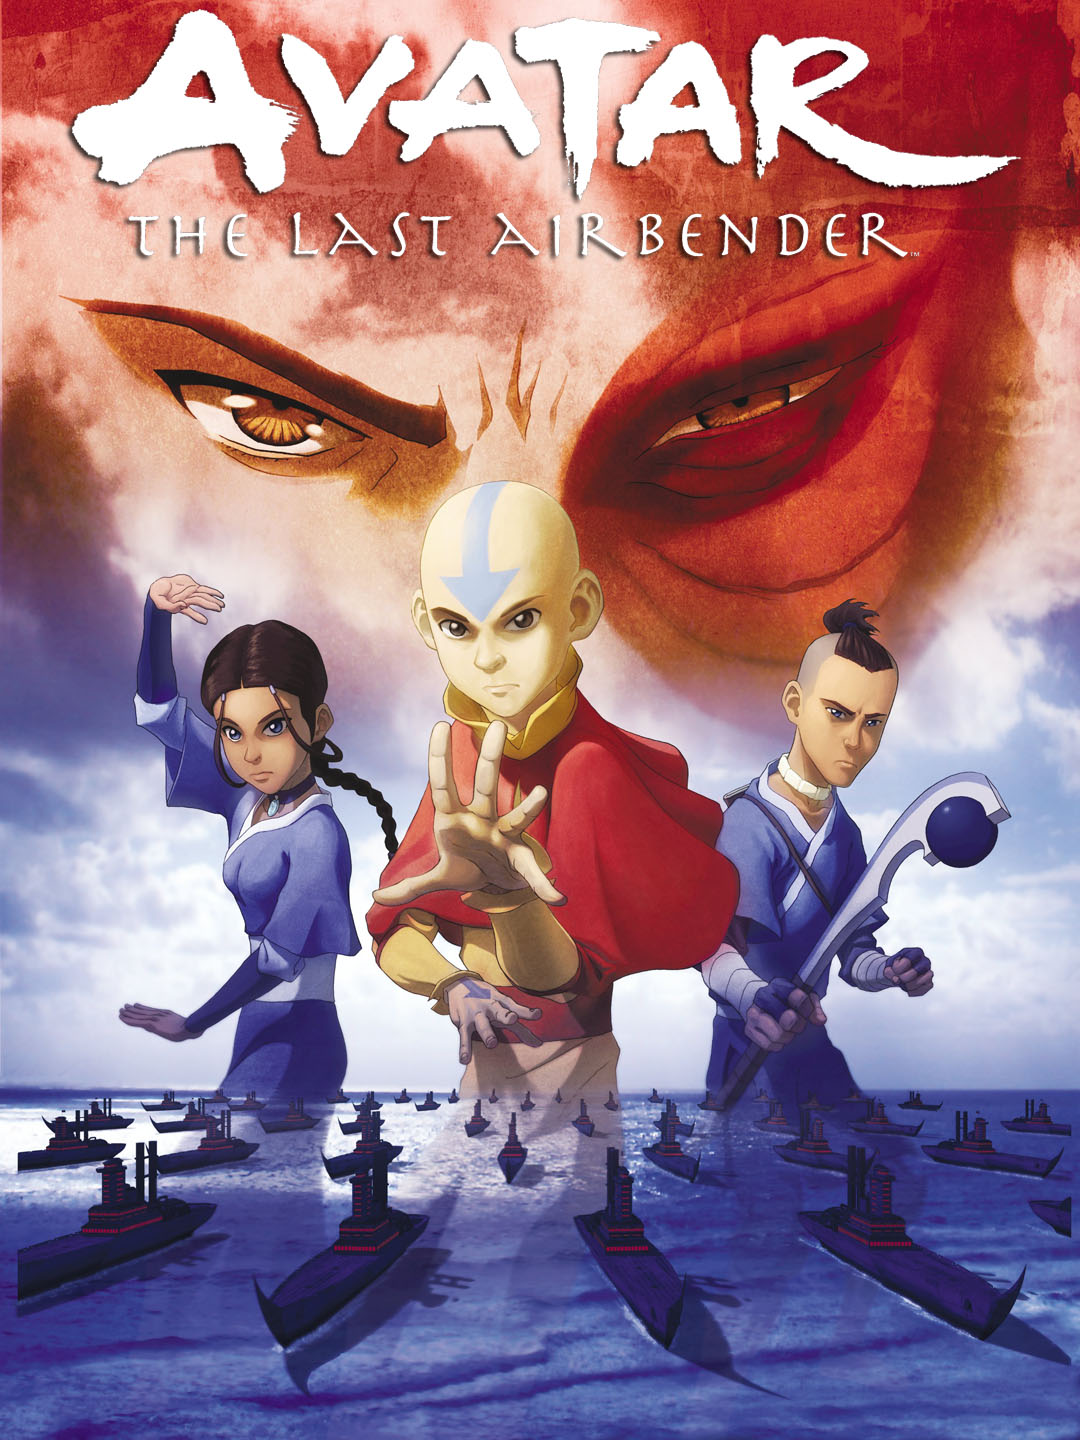 SMITE  Official Avatar The Last Airbender Trailer Aang Zuko Korra   YouTube